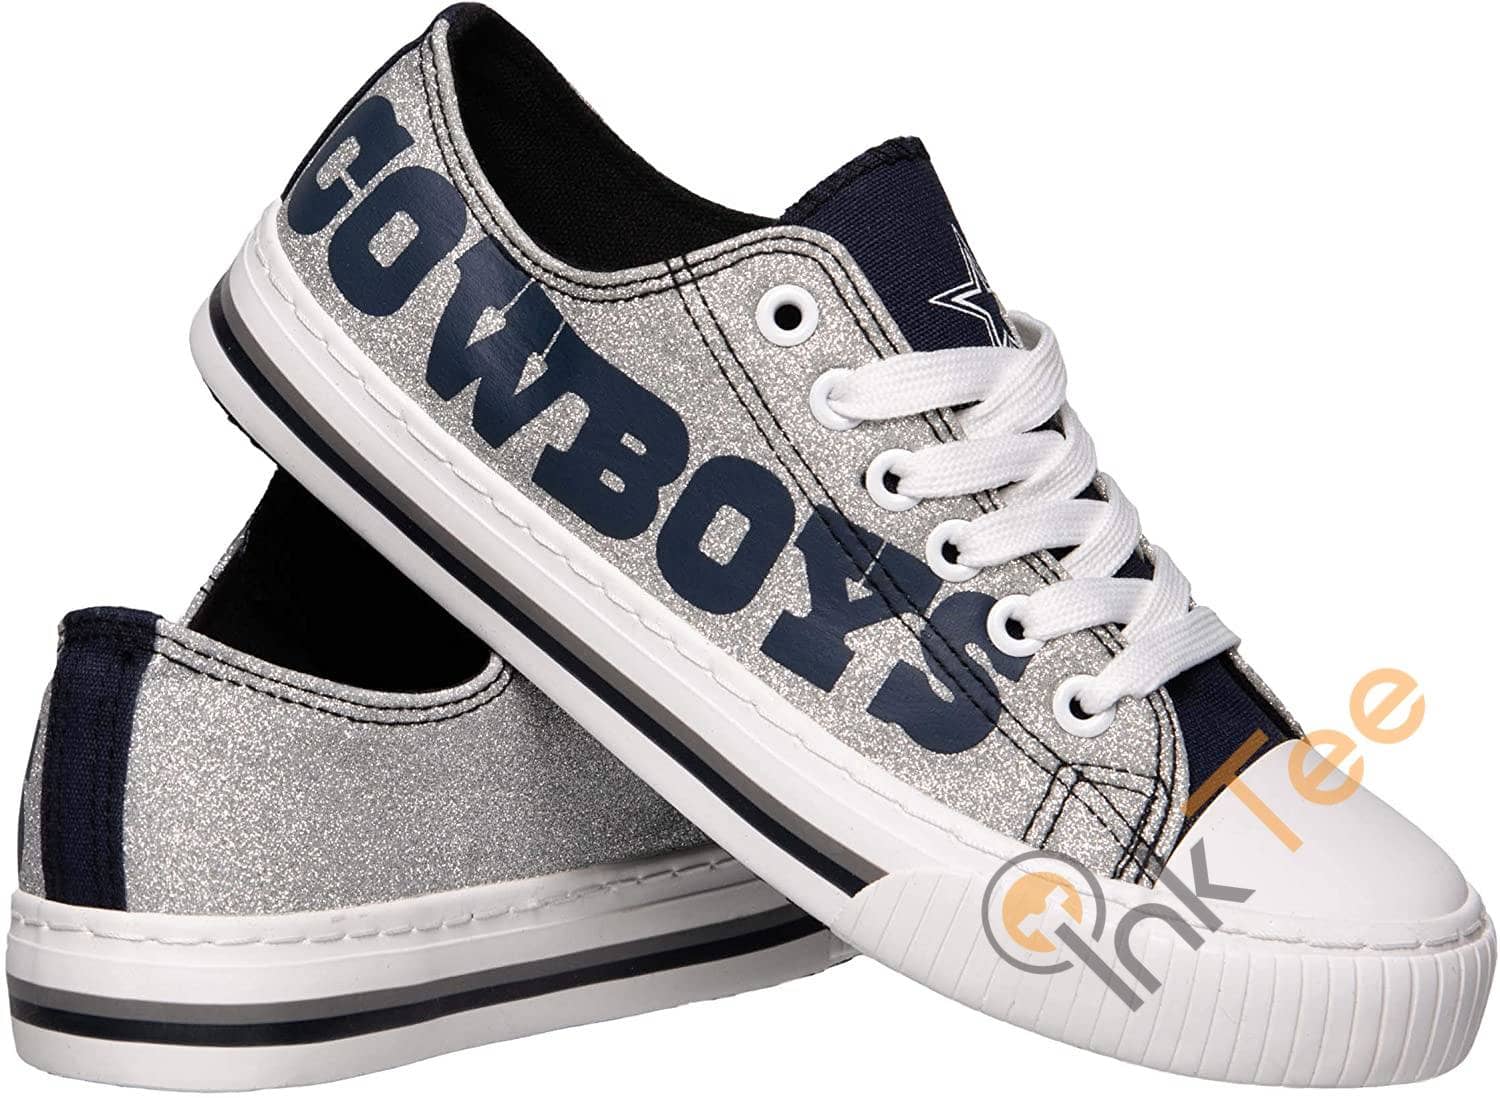 Nfl Dallas Cowboys Team Low Top Sneakers